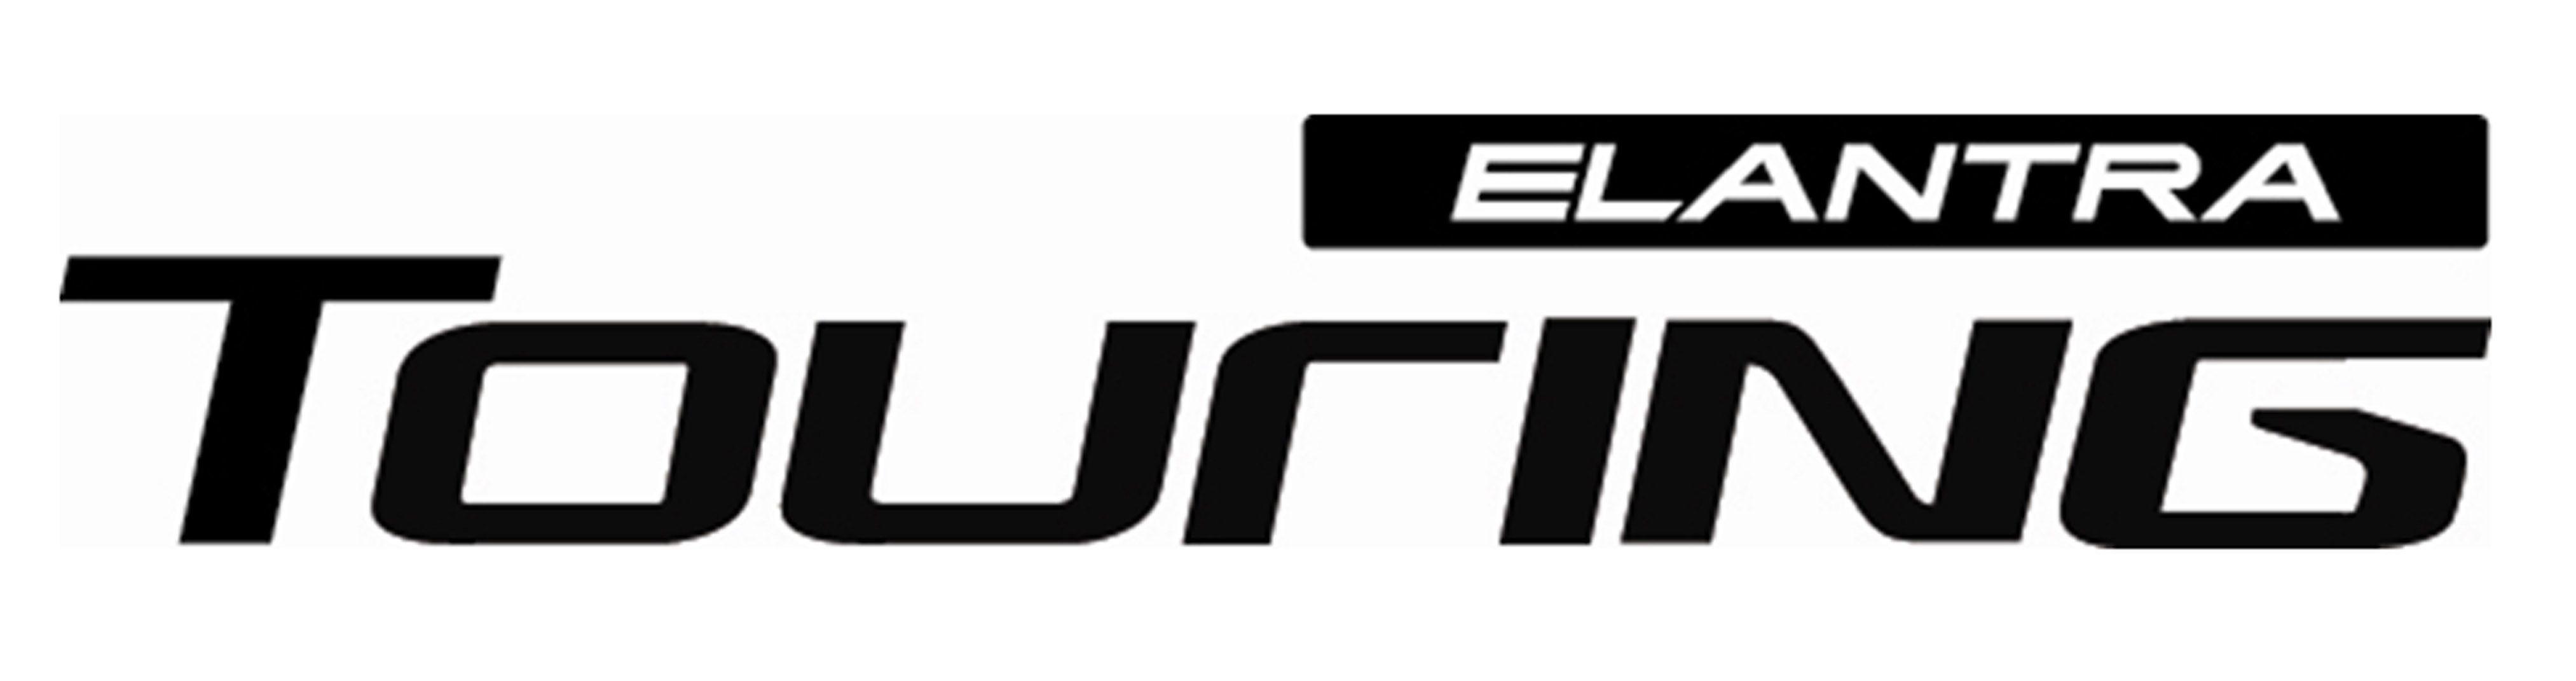 Touring Logo - Hyundai related emblems